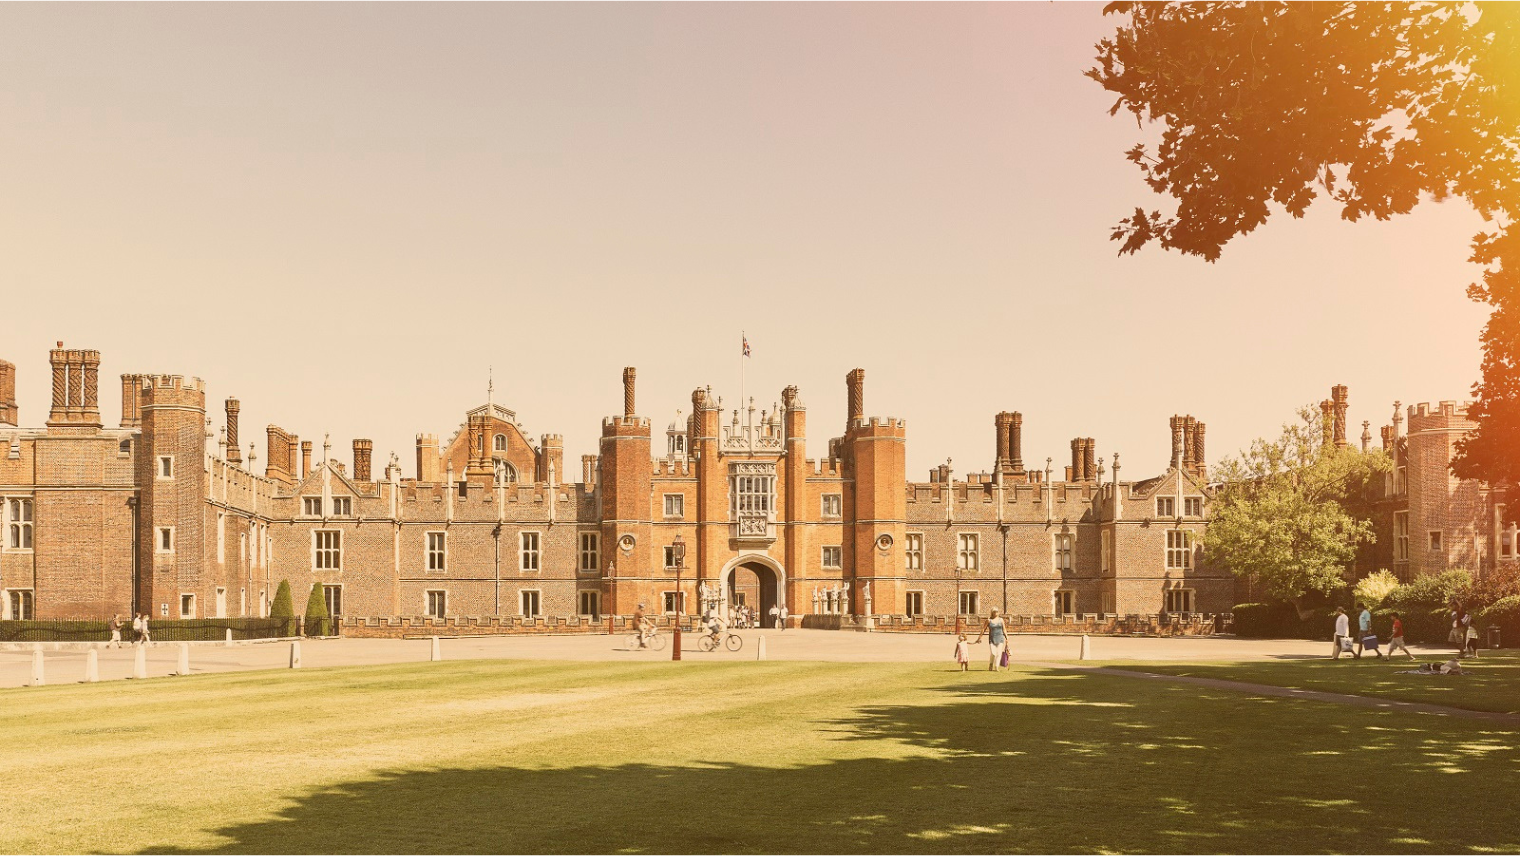 Image of Hampton Court Palace